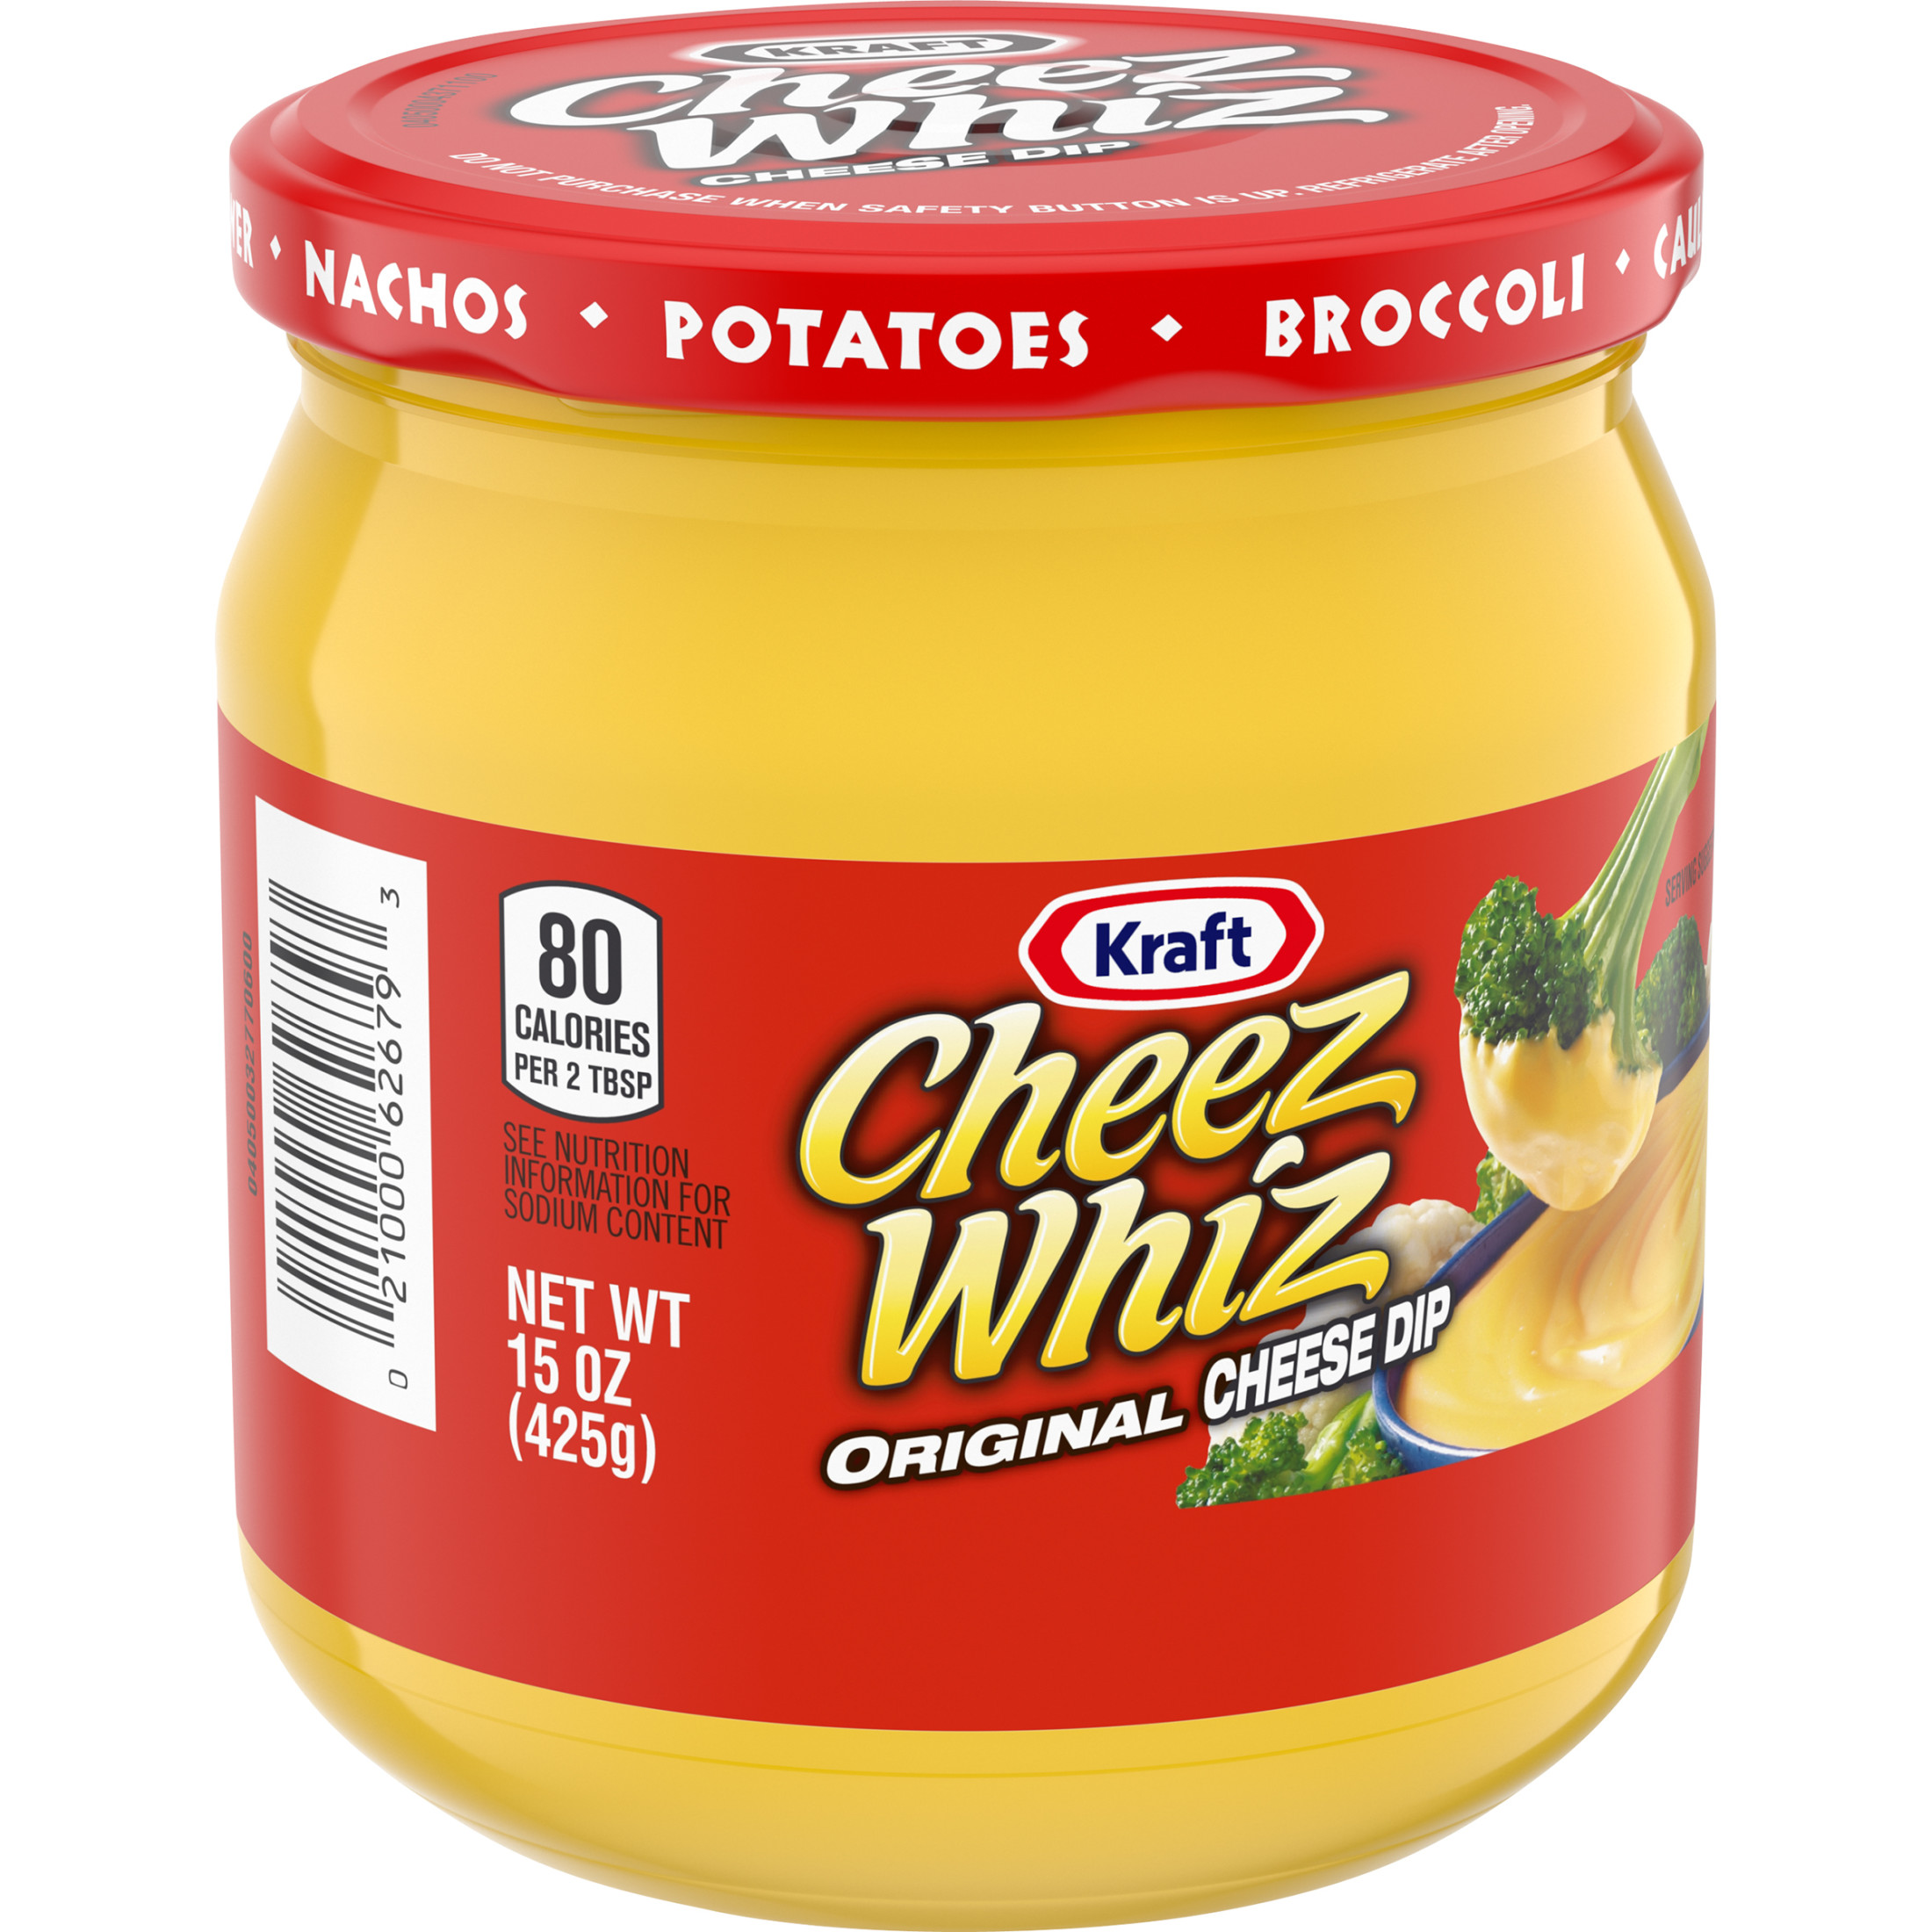 Cheez Whiz Original Cheese Dip, 15 oz Jar - image 3 of 6